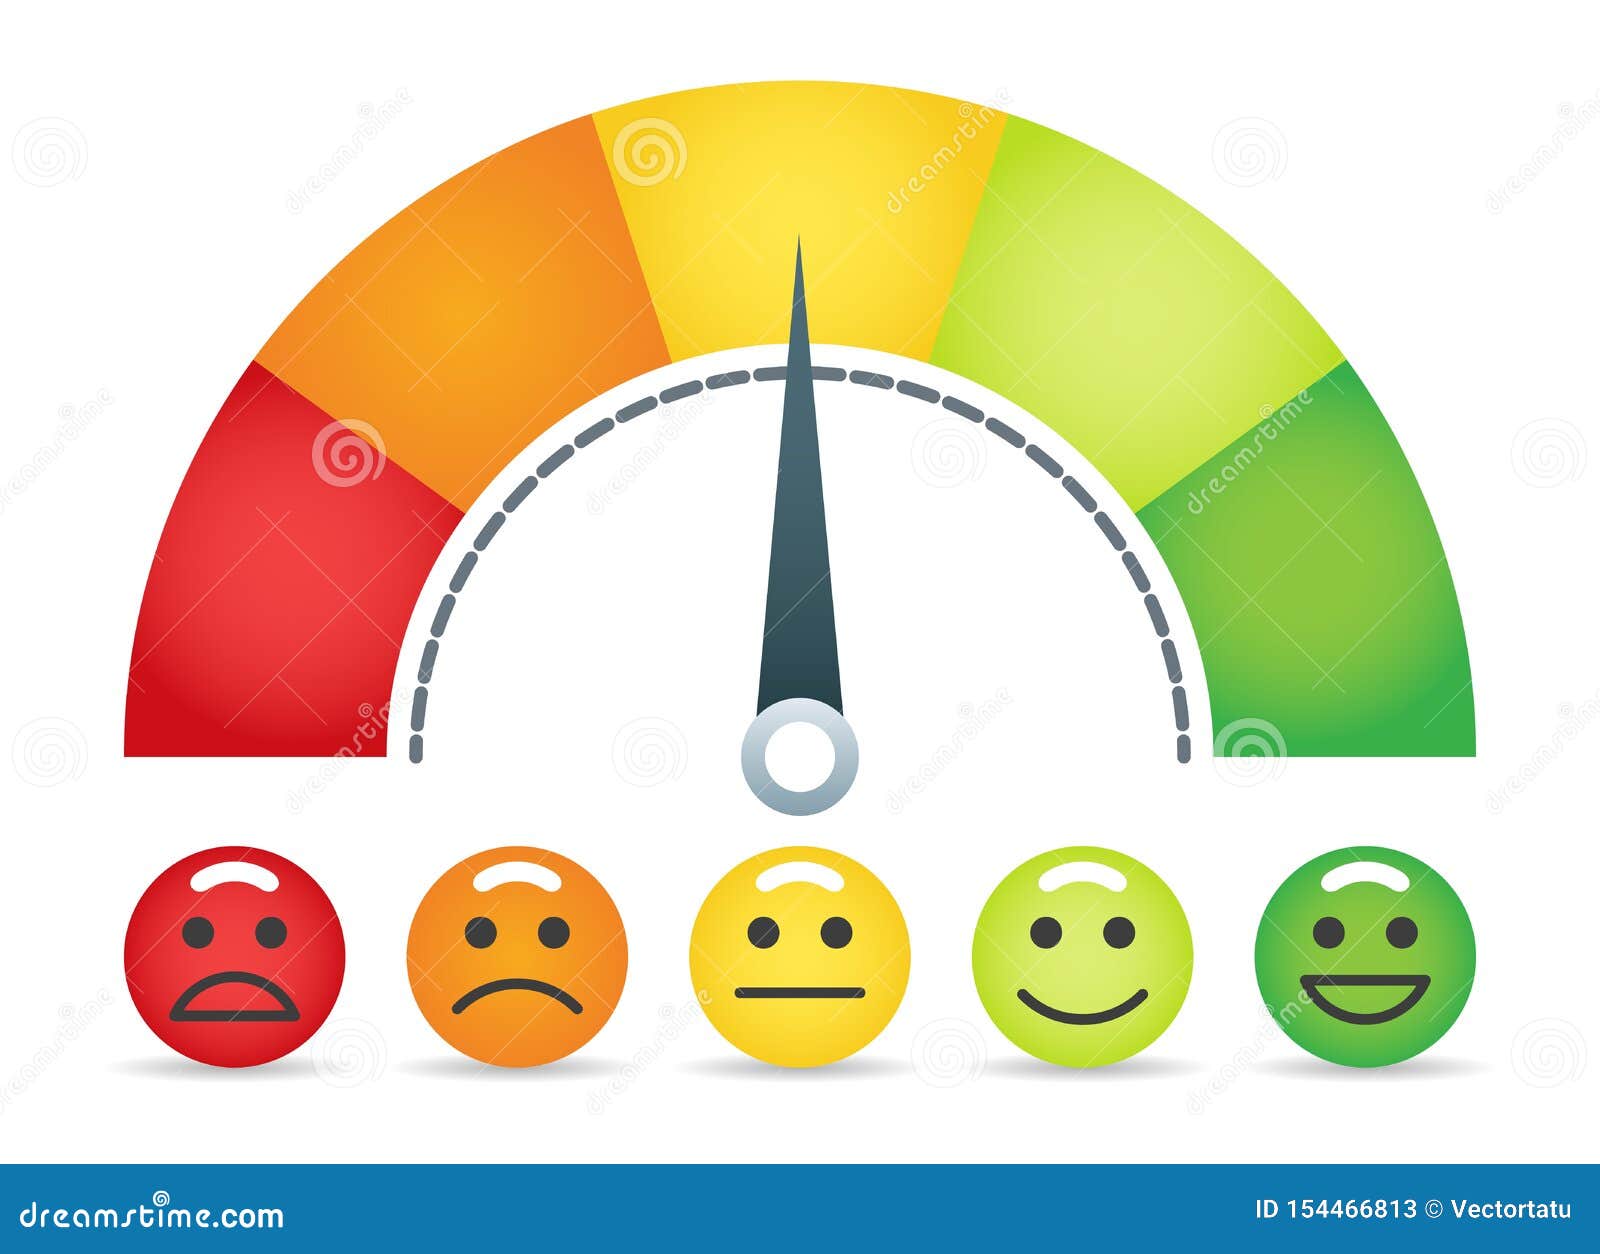 emotion scale speedometer